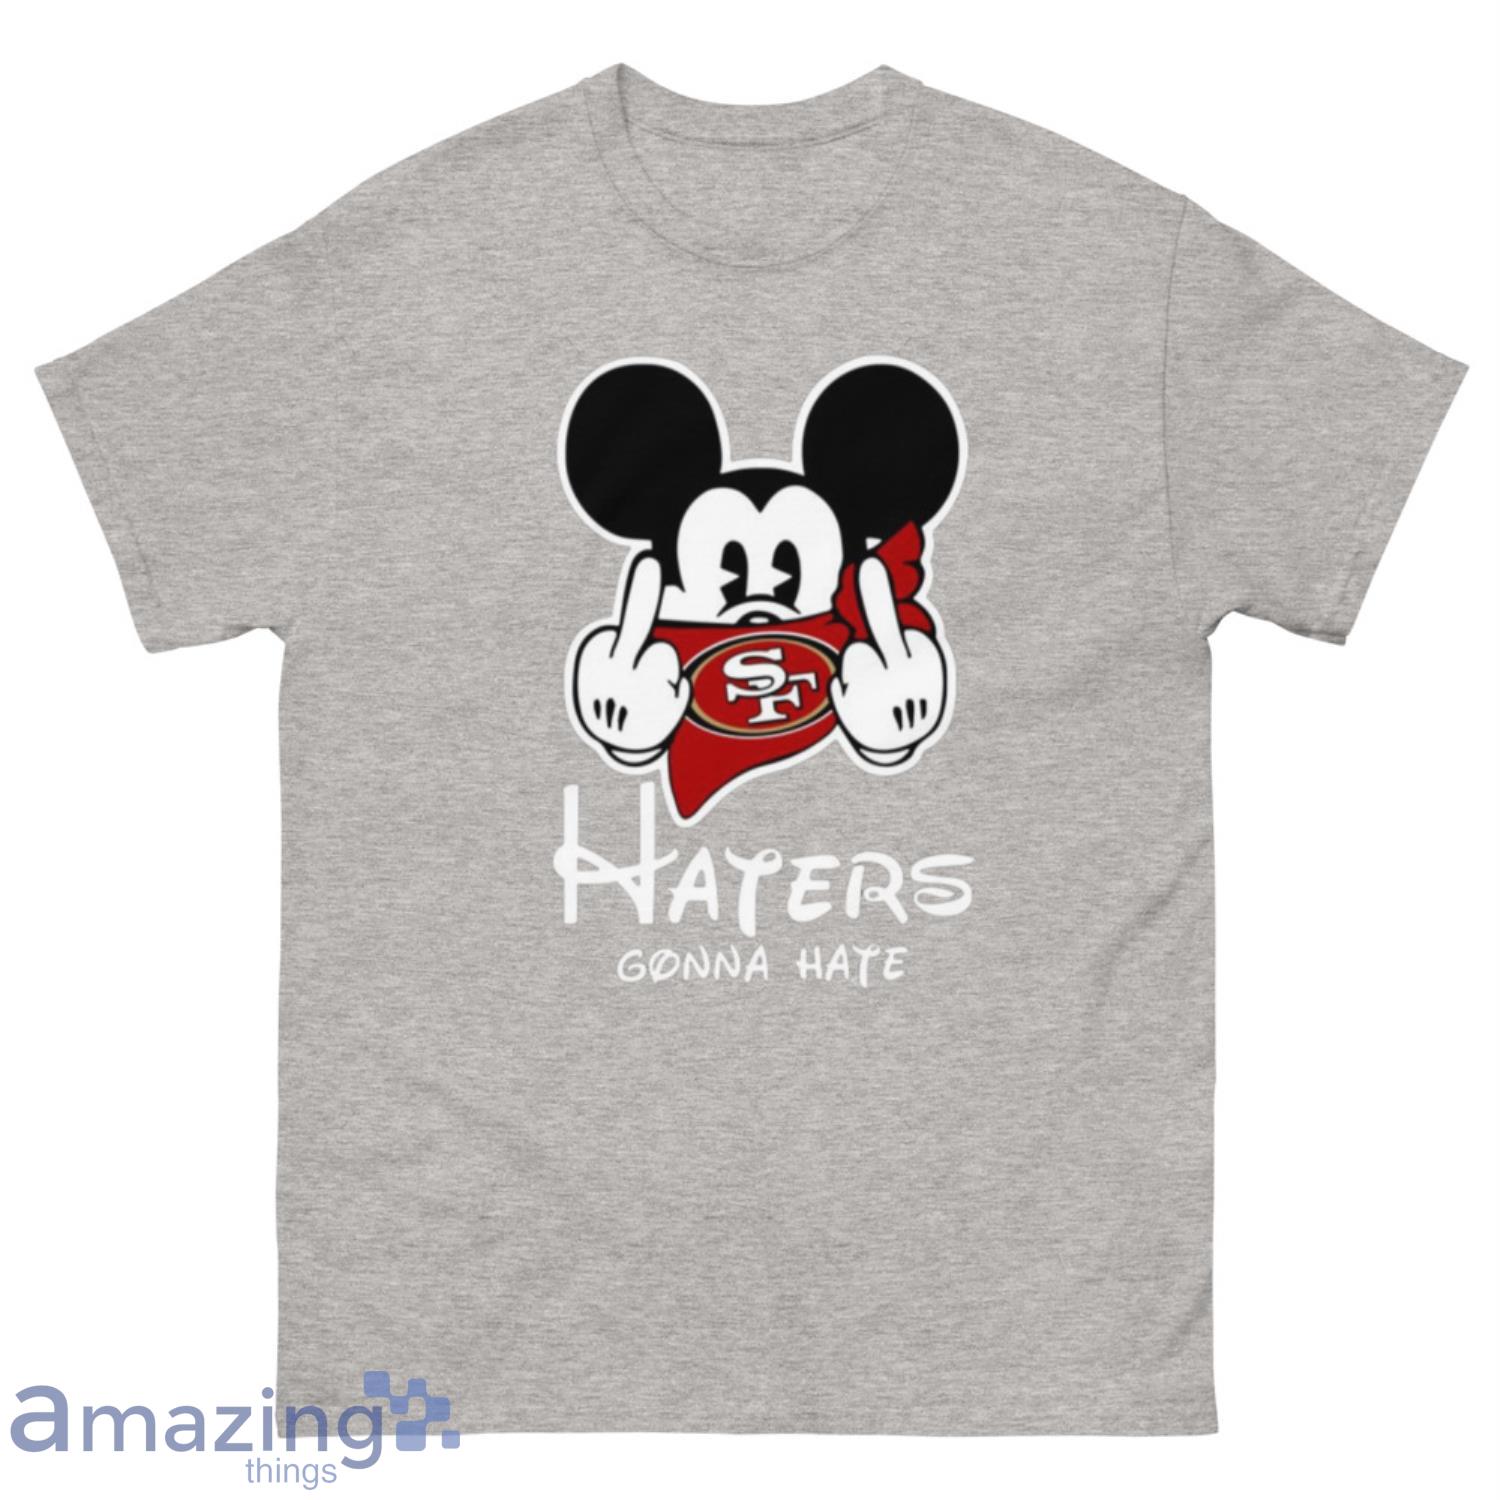 NFL San Francisco 49ers Haters Gonna Hate Mickey Mouse Disney Football T-Shirt Sweatshirt Hoodie - 500 Men’s Classic Tee Gildan-2